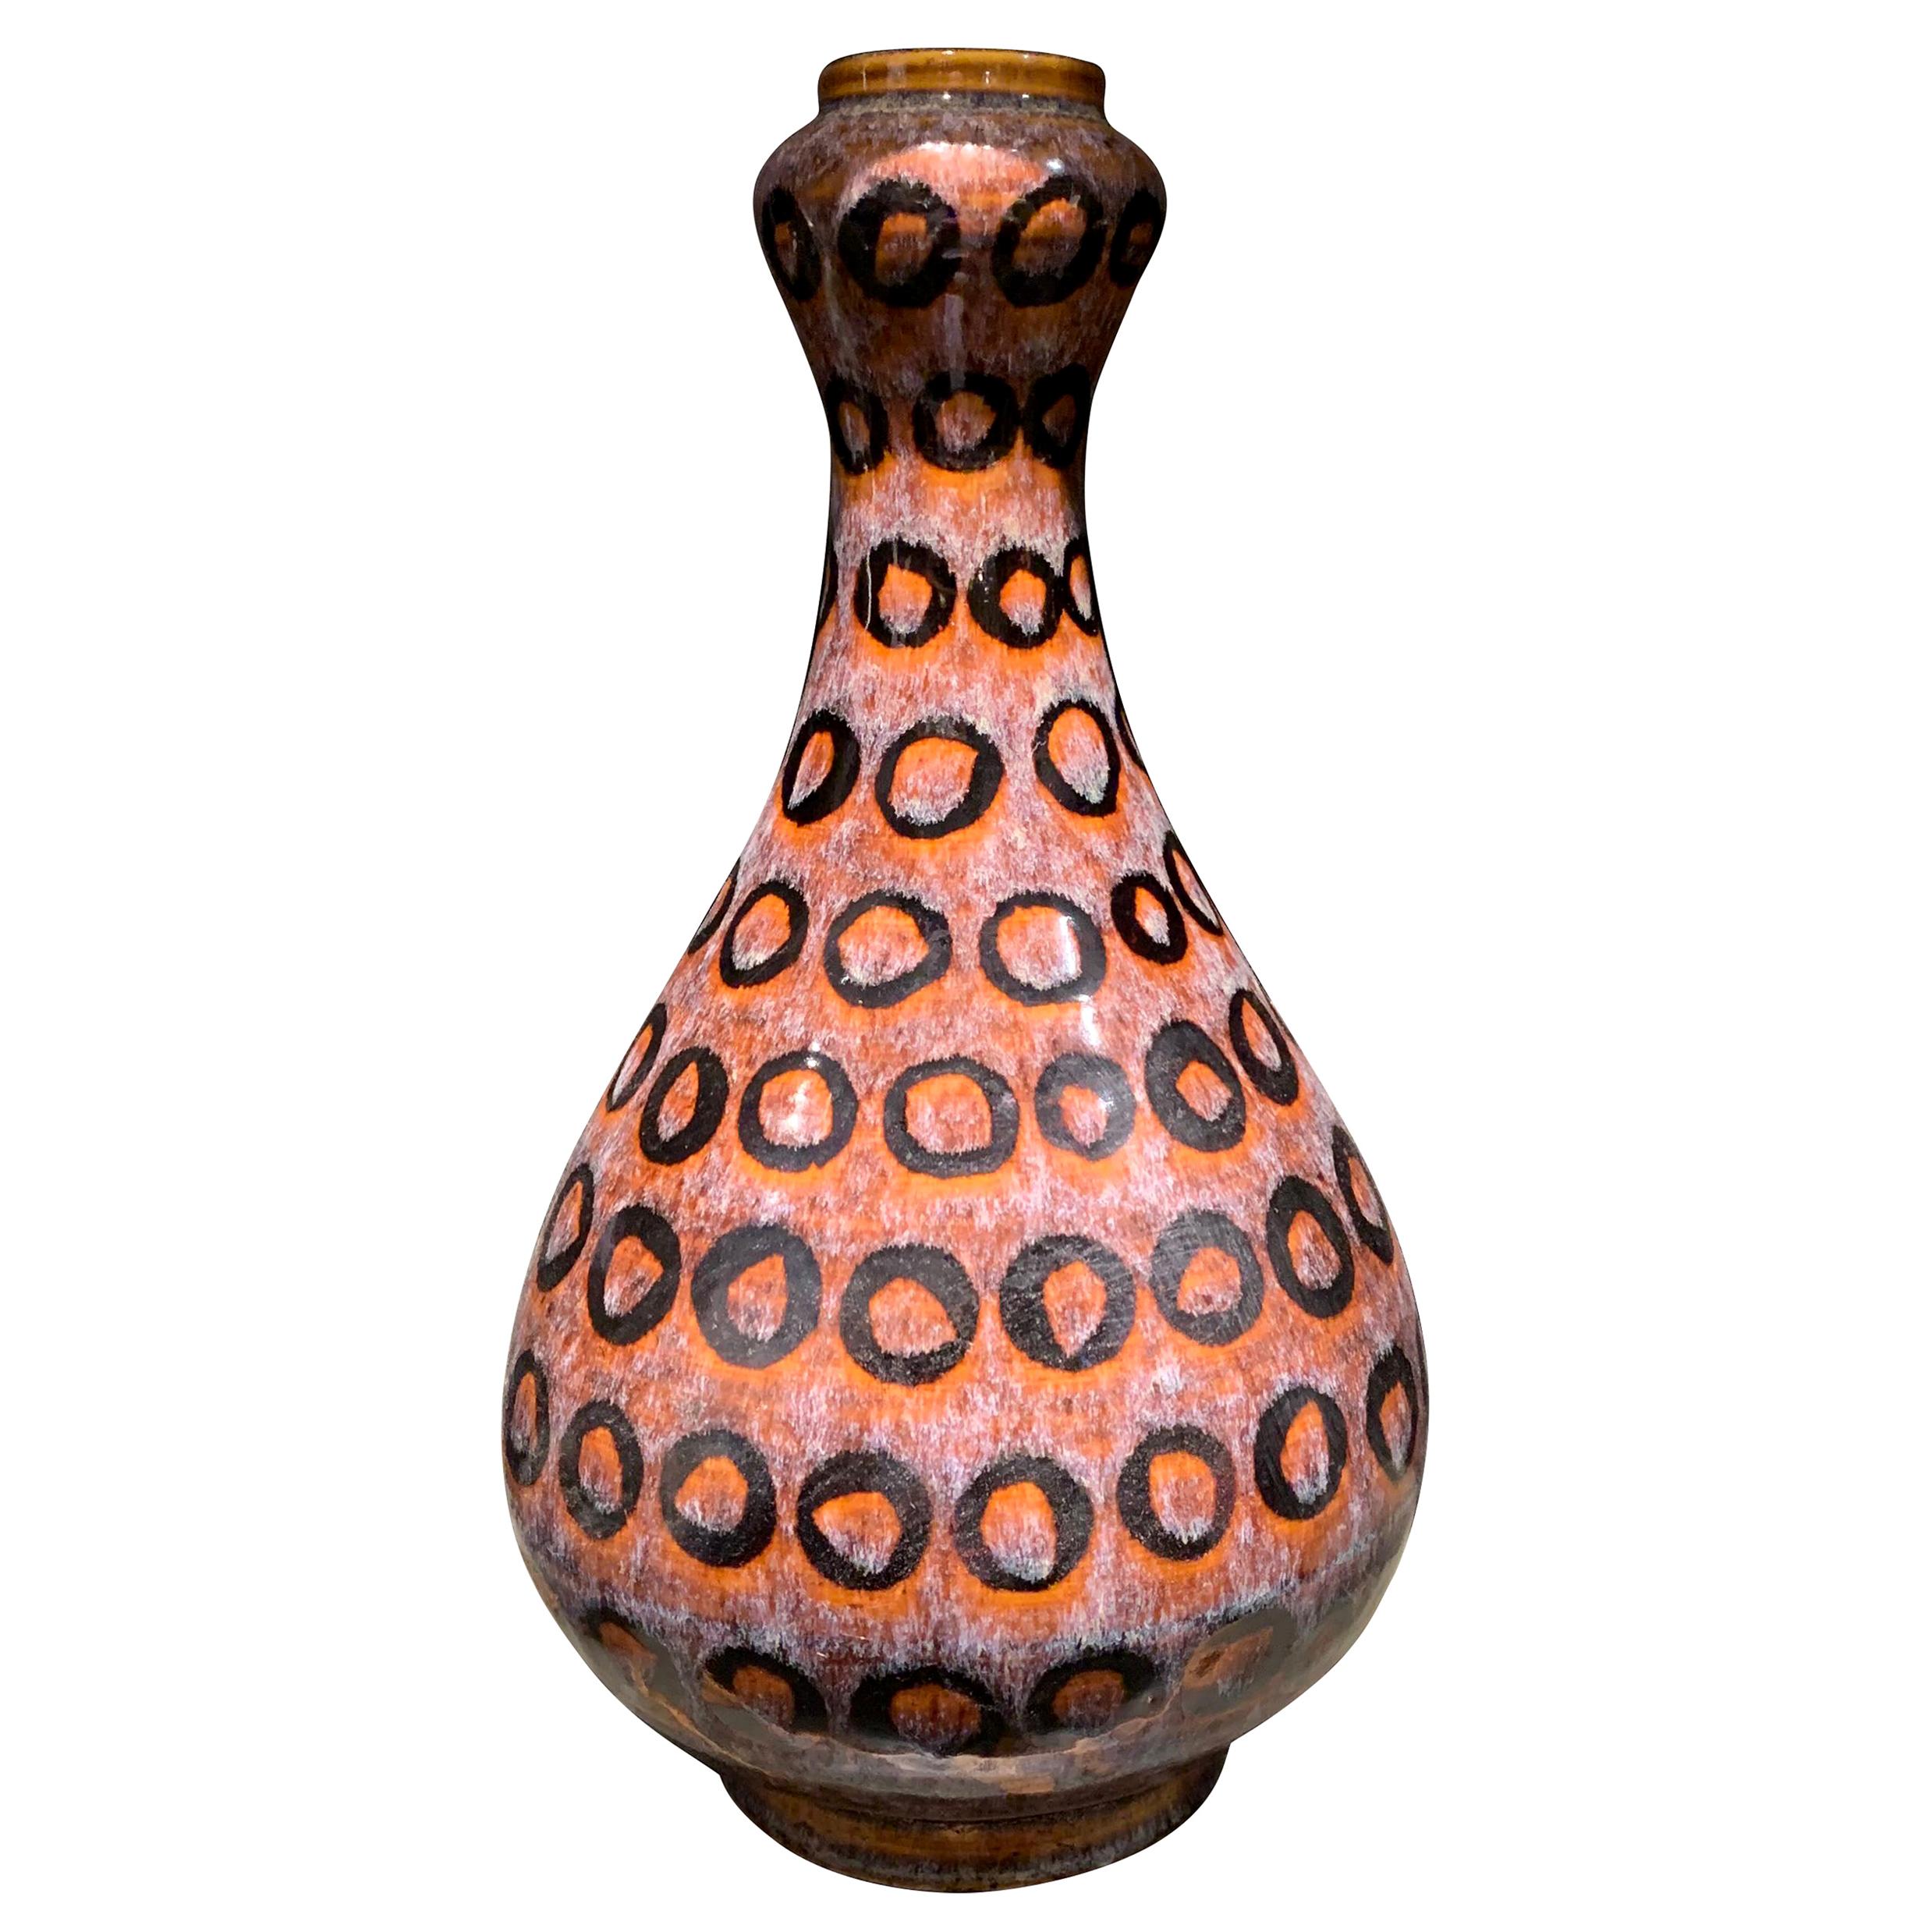 Circle Design Vase, China, Contemporary